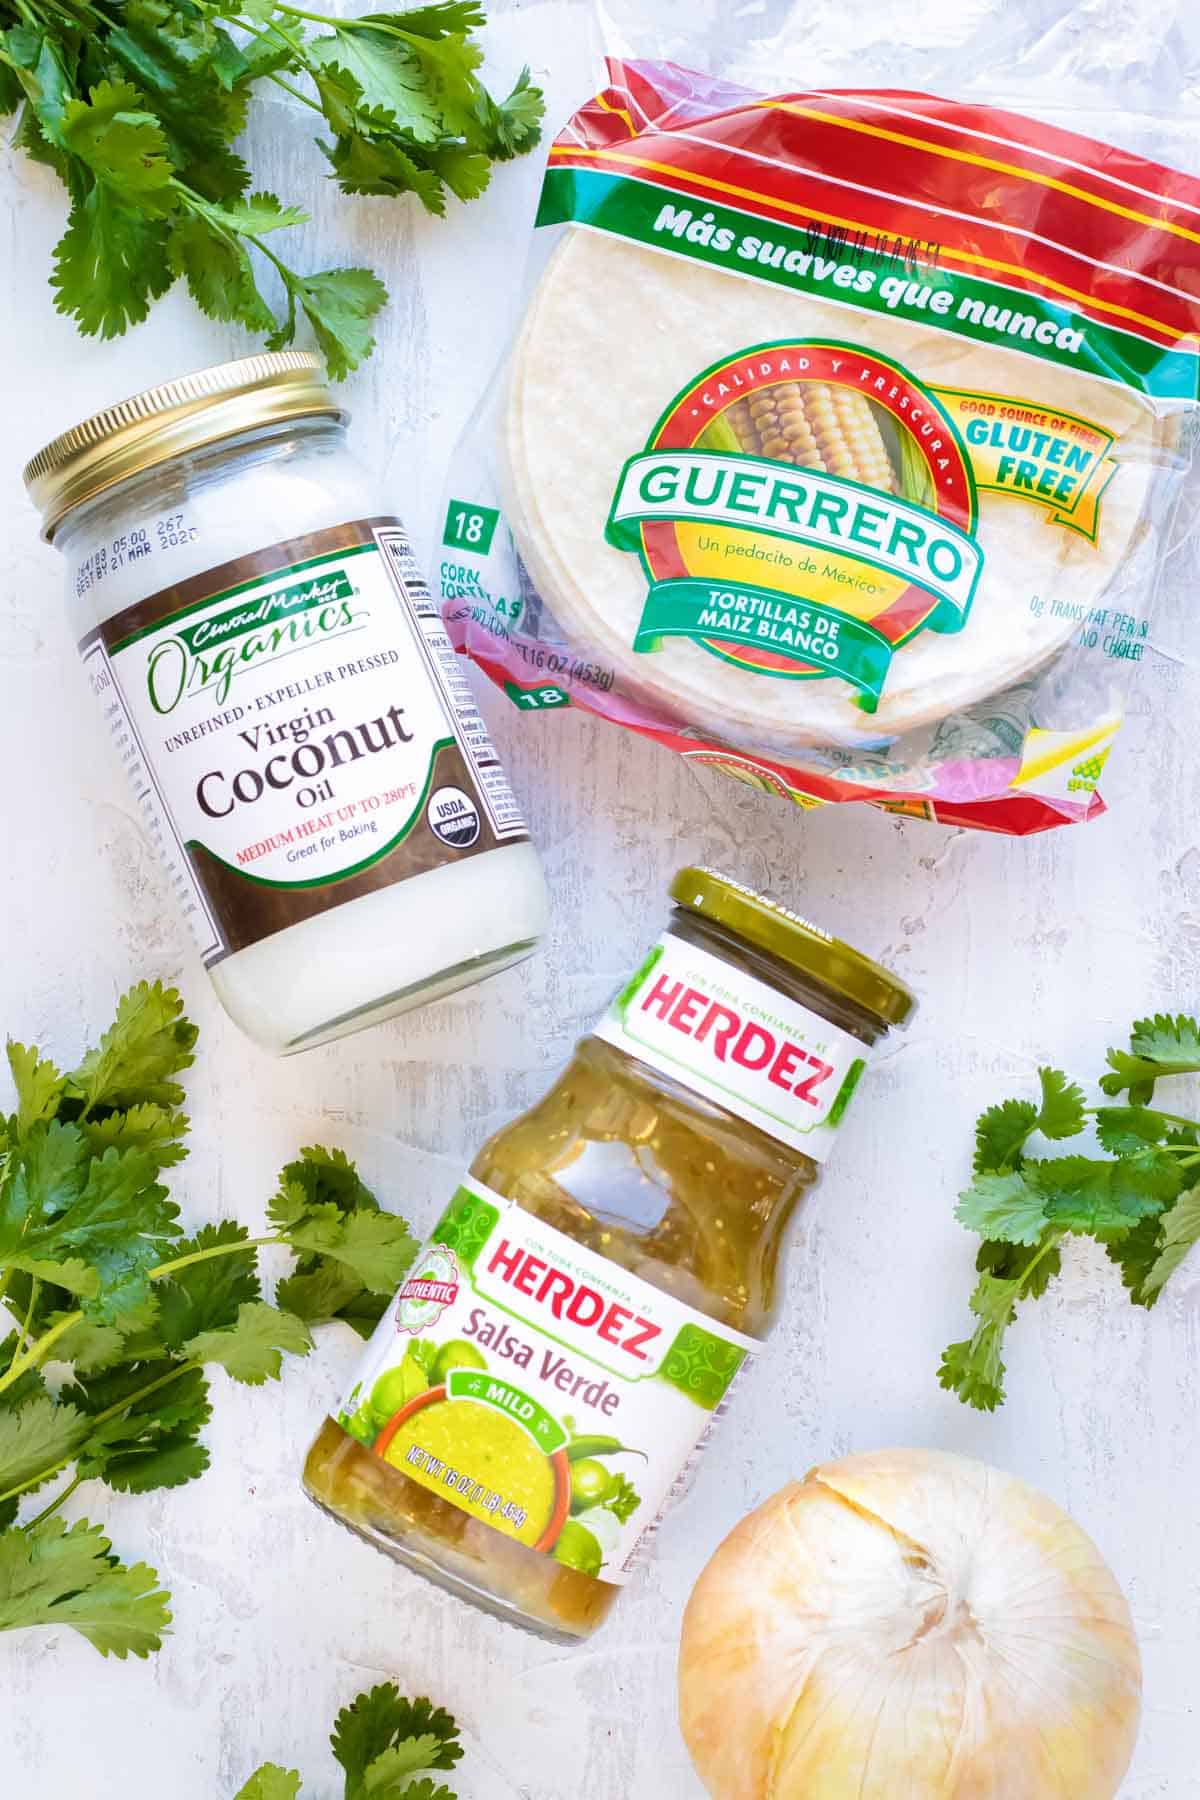 Corn tortillas, coconut oil, and salsa verde as the ingredients for chicken enchiladas verdes.